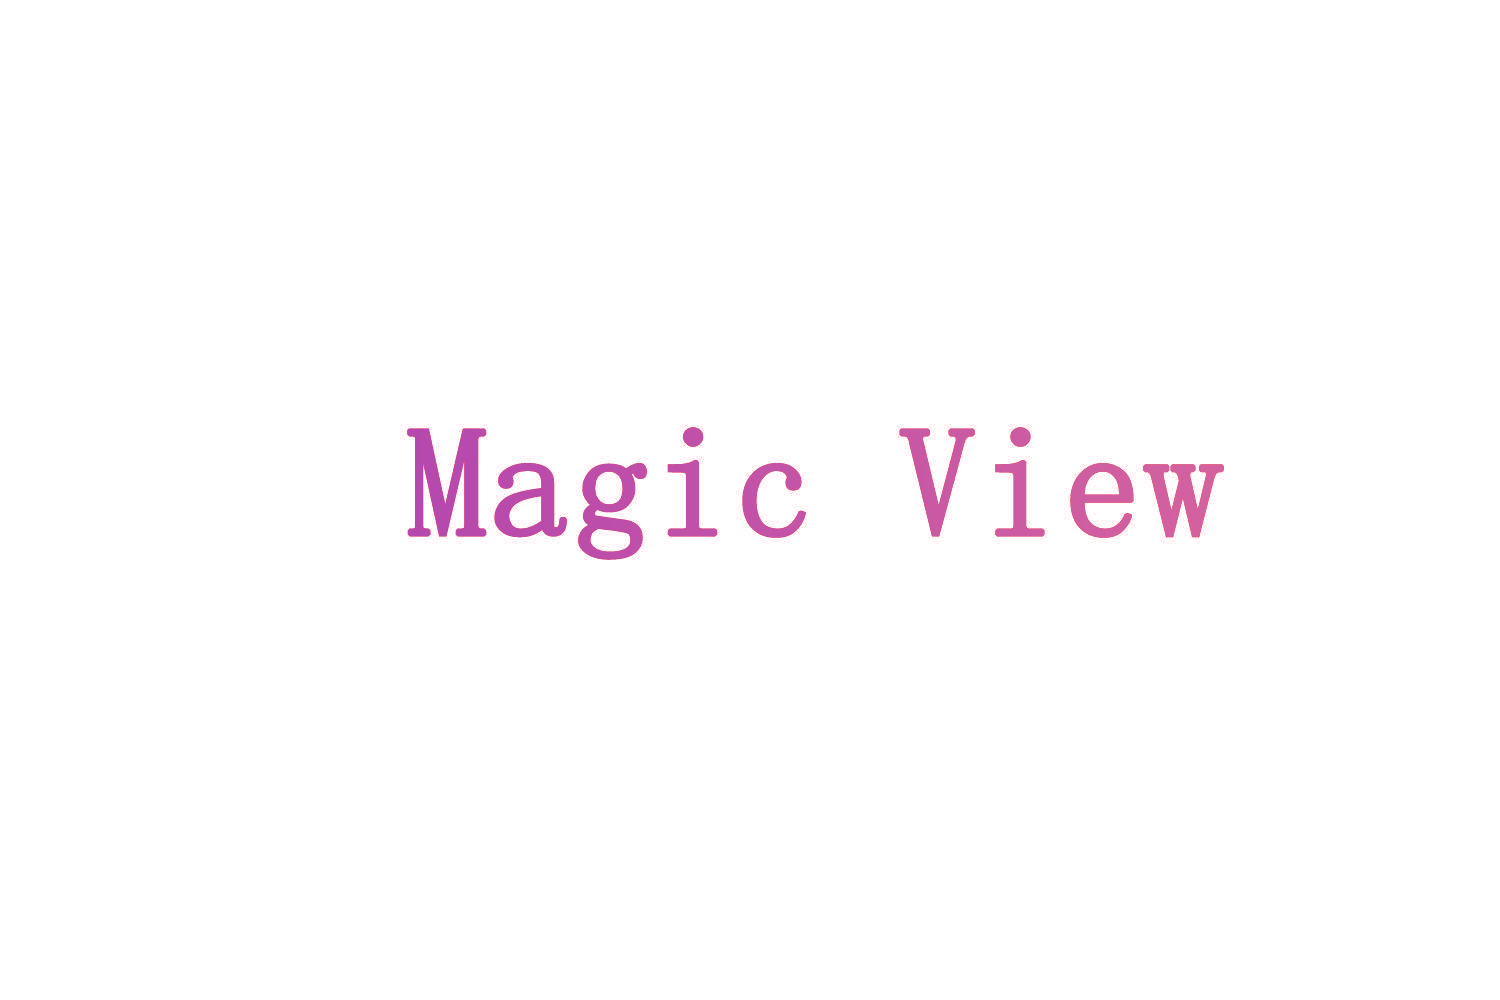 MAGIC VIEW